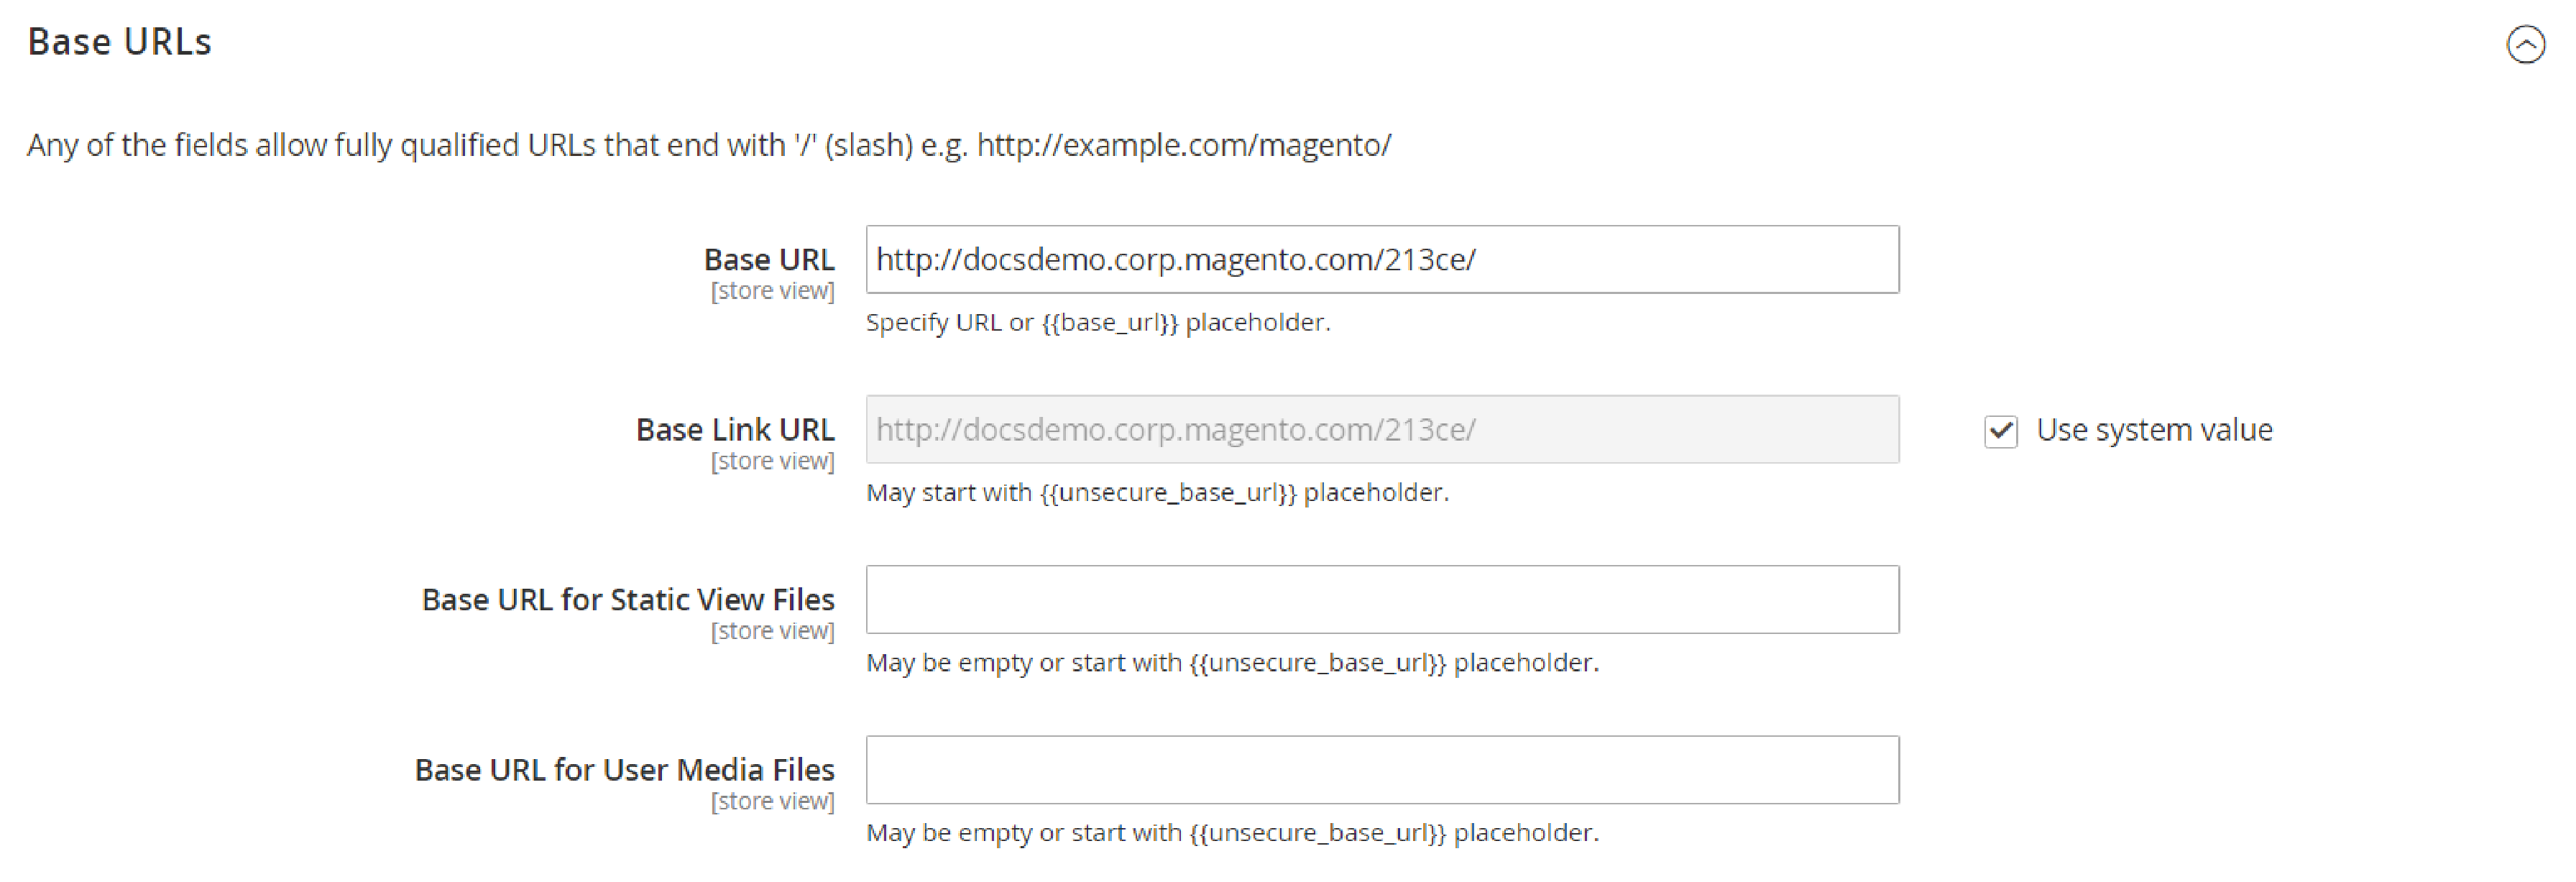  Configure Base URL for Magento Static &amp; User Media Files